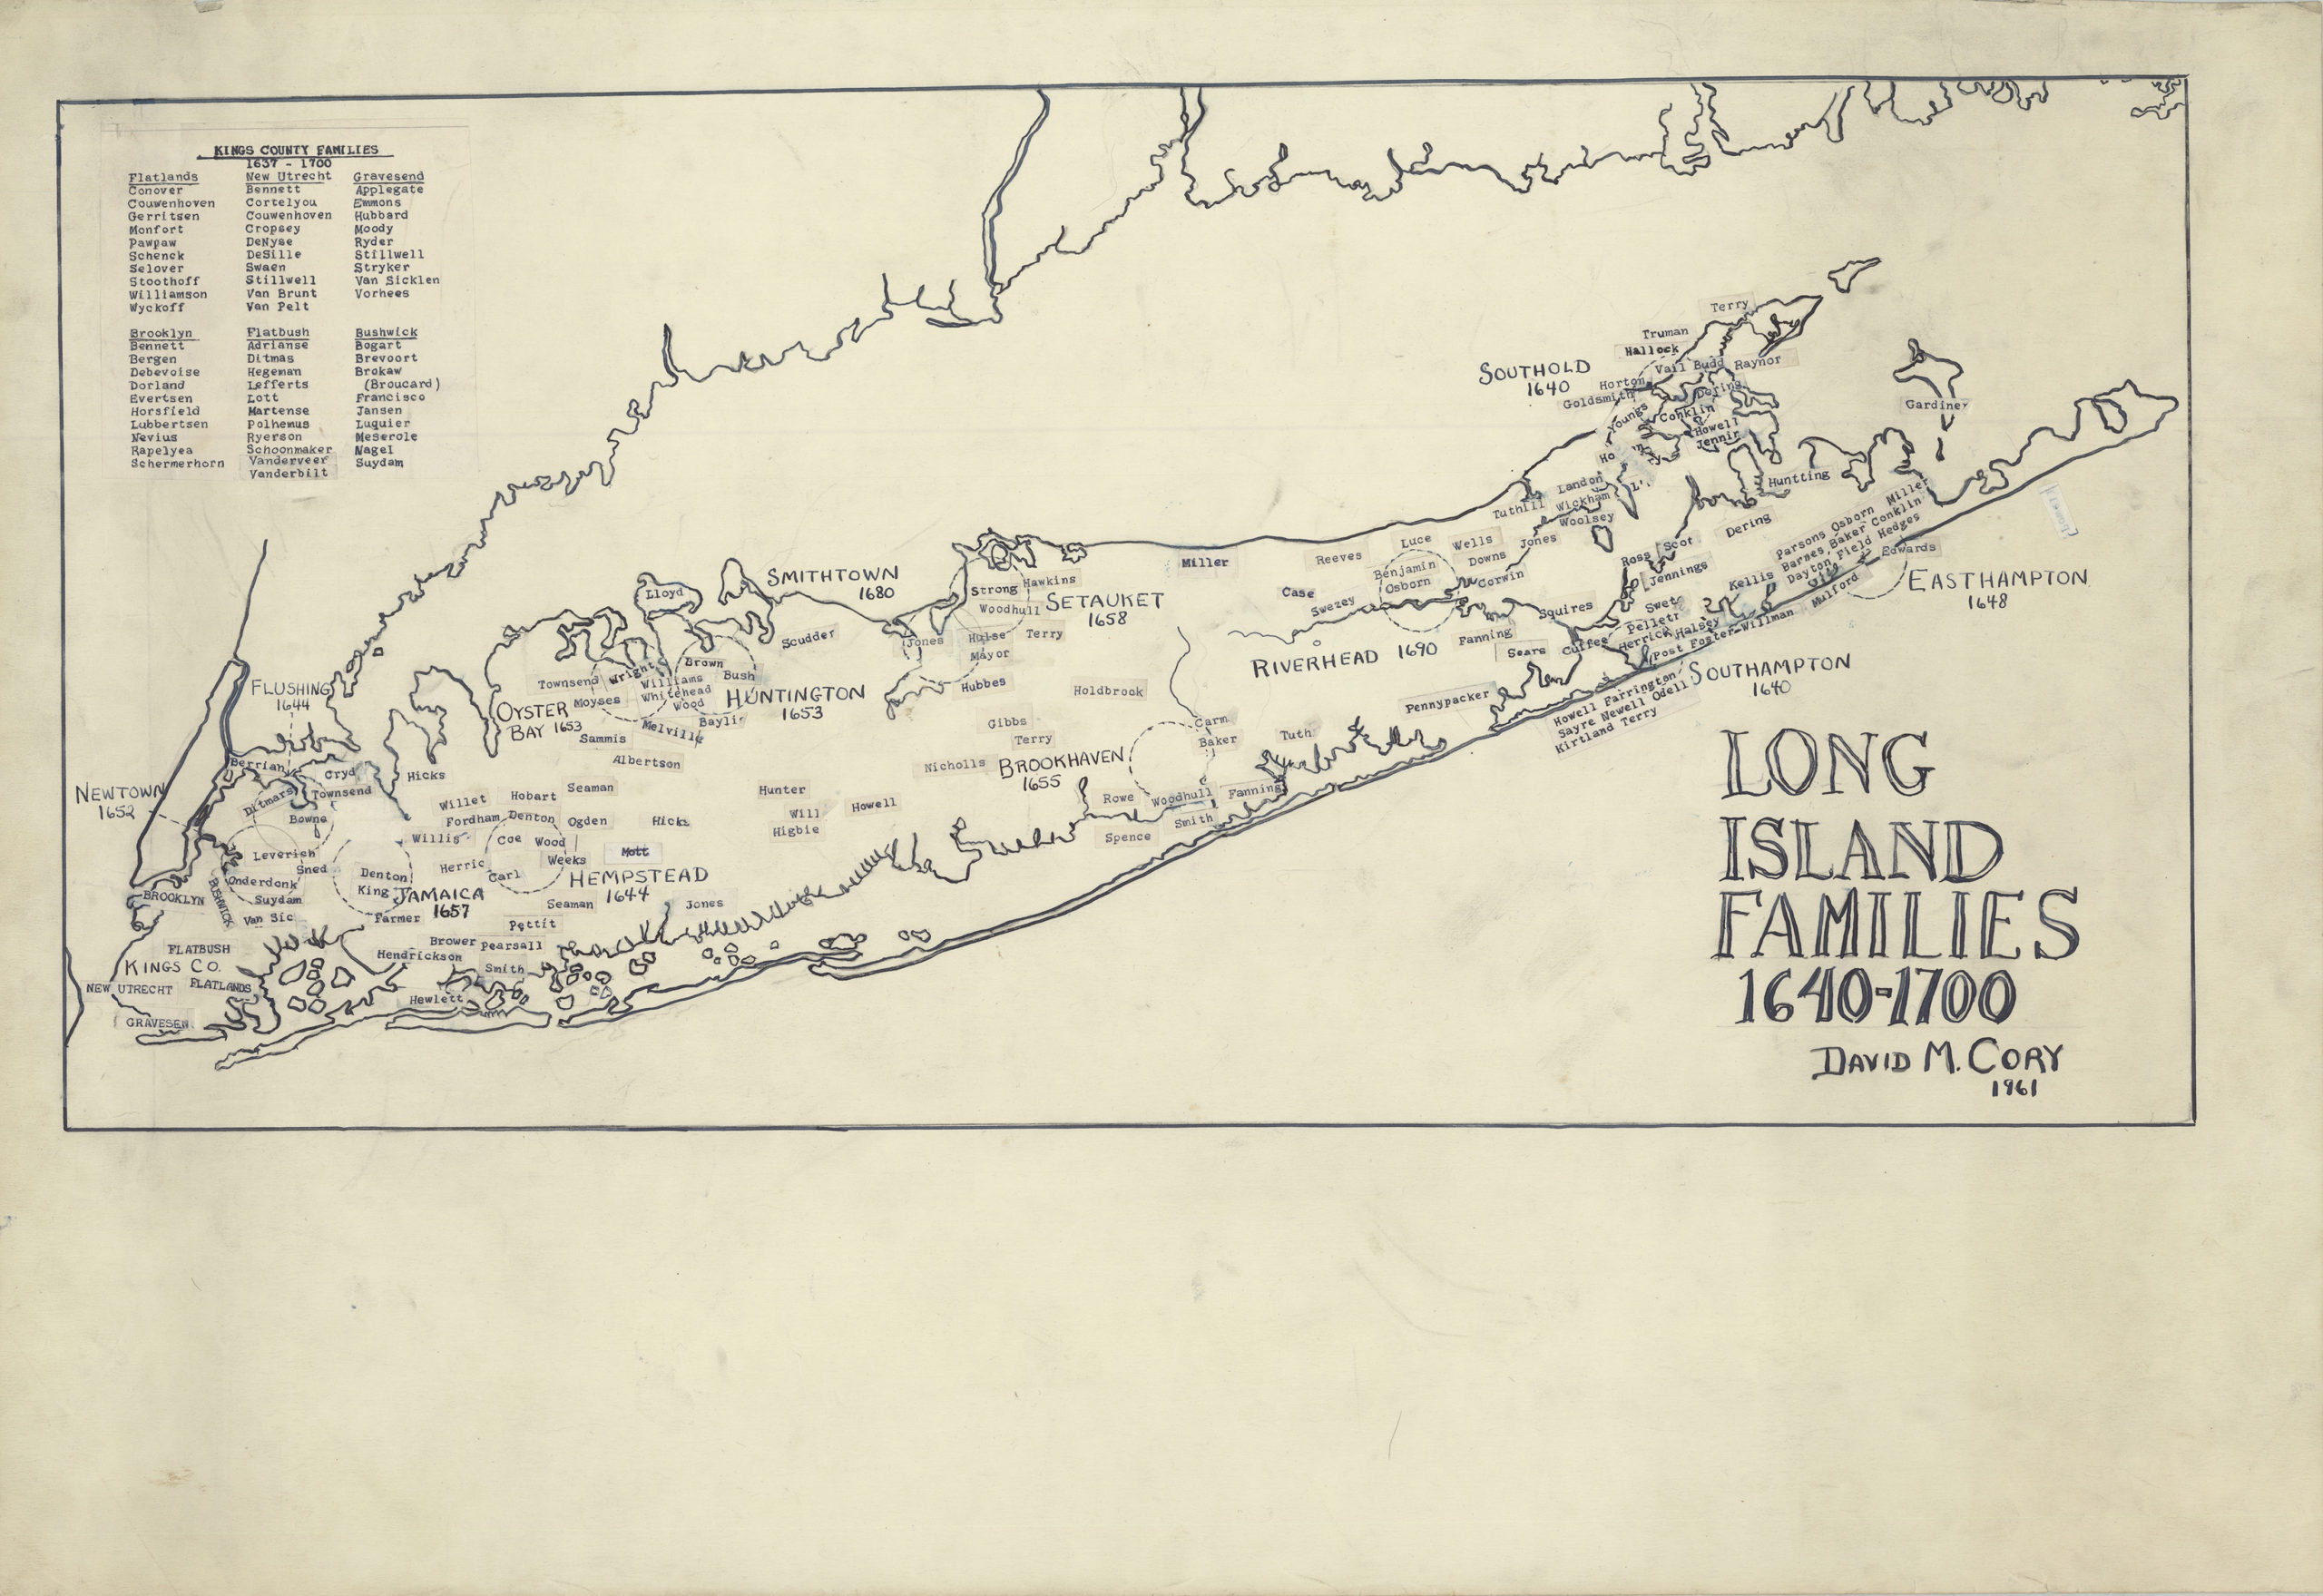 Long Island Families Map 1640-1700